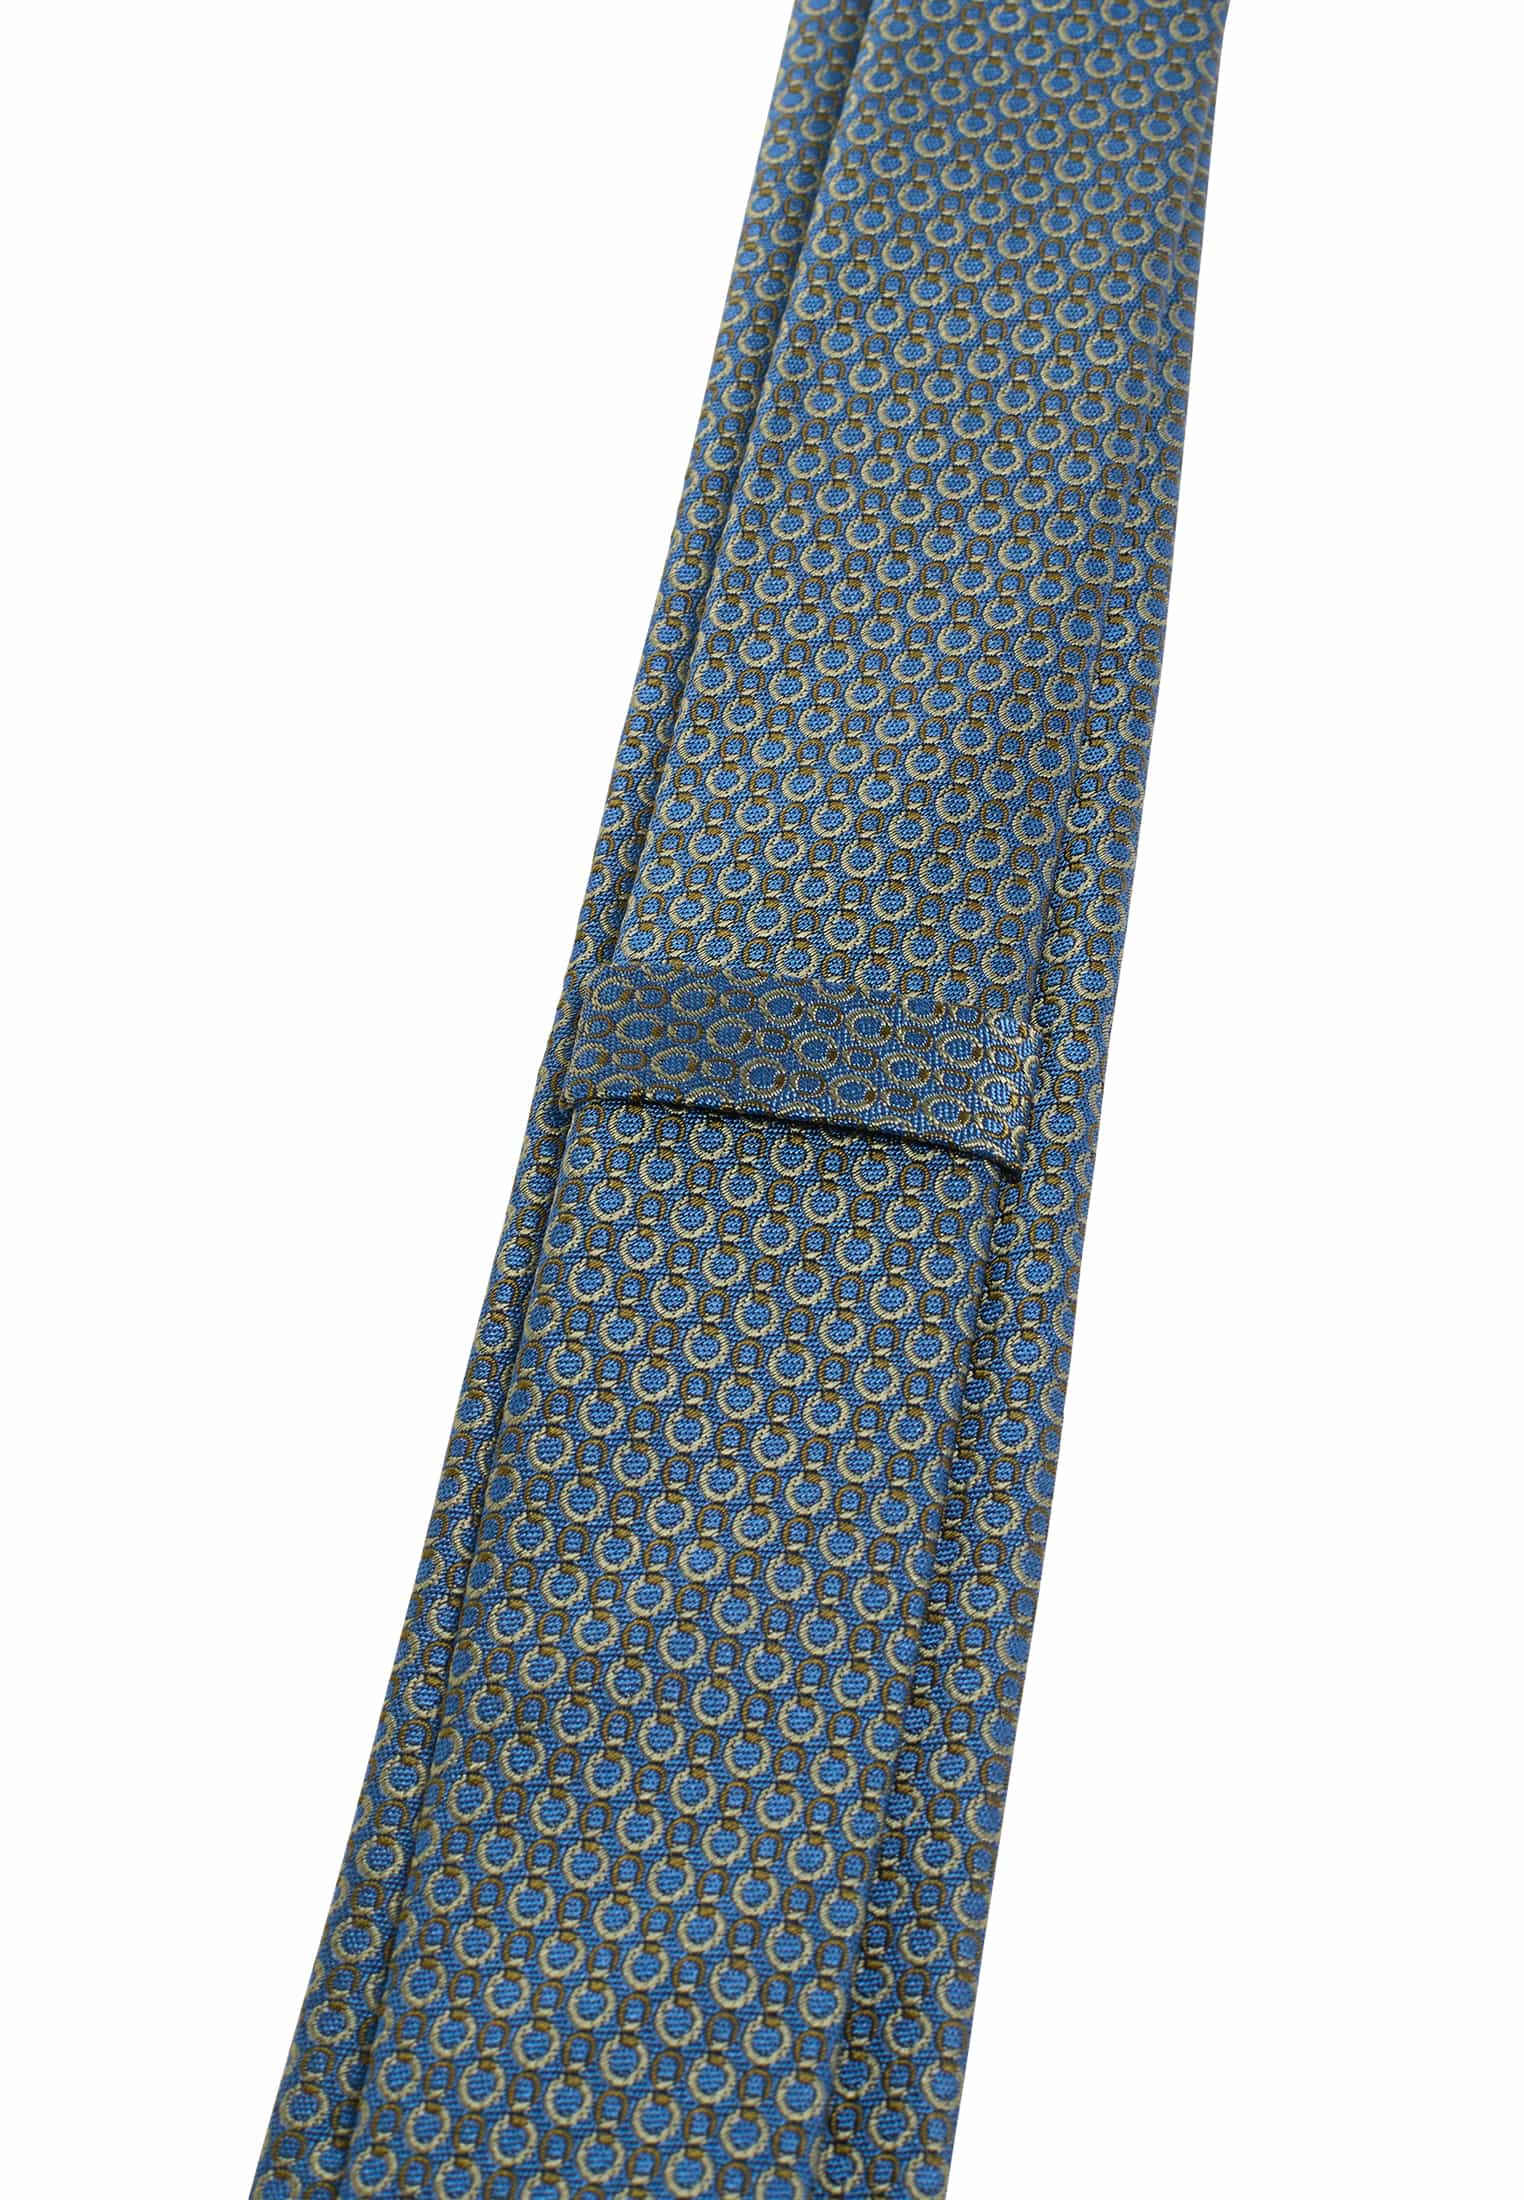 Cravate bleu/vert structuré